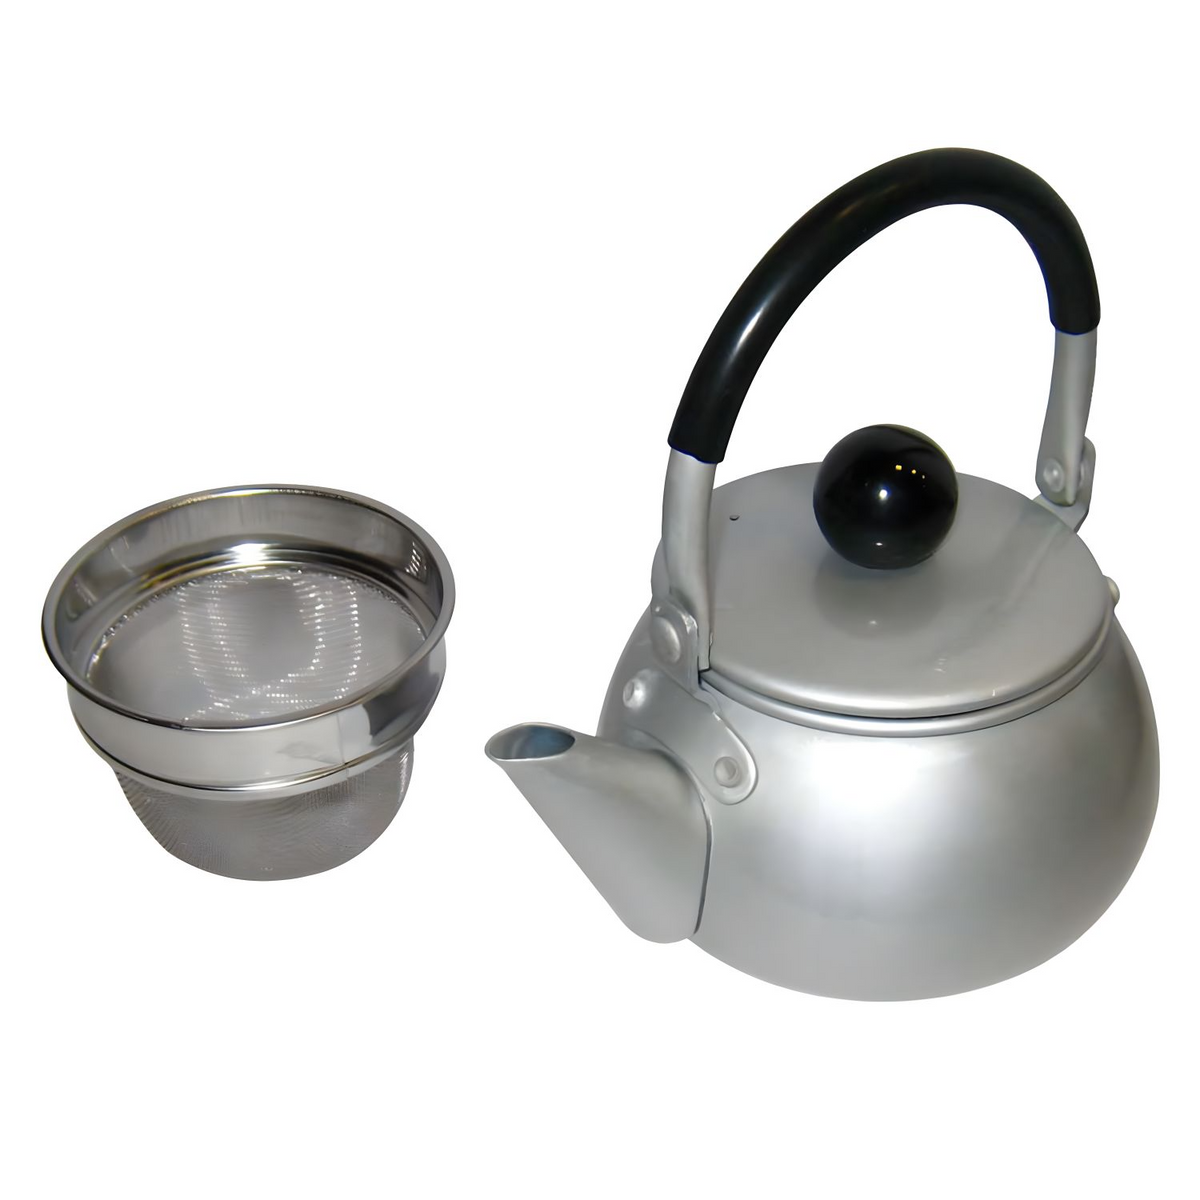 Maekawa Kinzoku Aluminum Kyusu Teapot with Tea Strainer